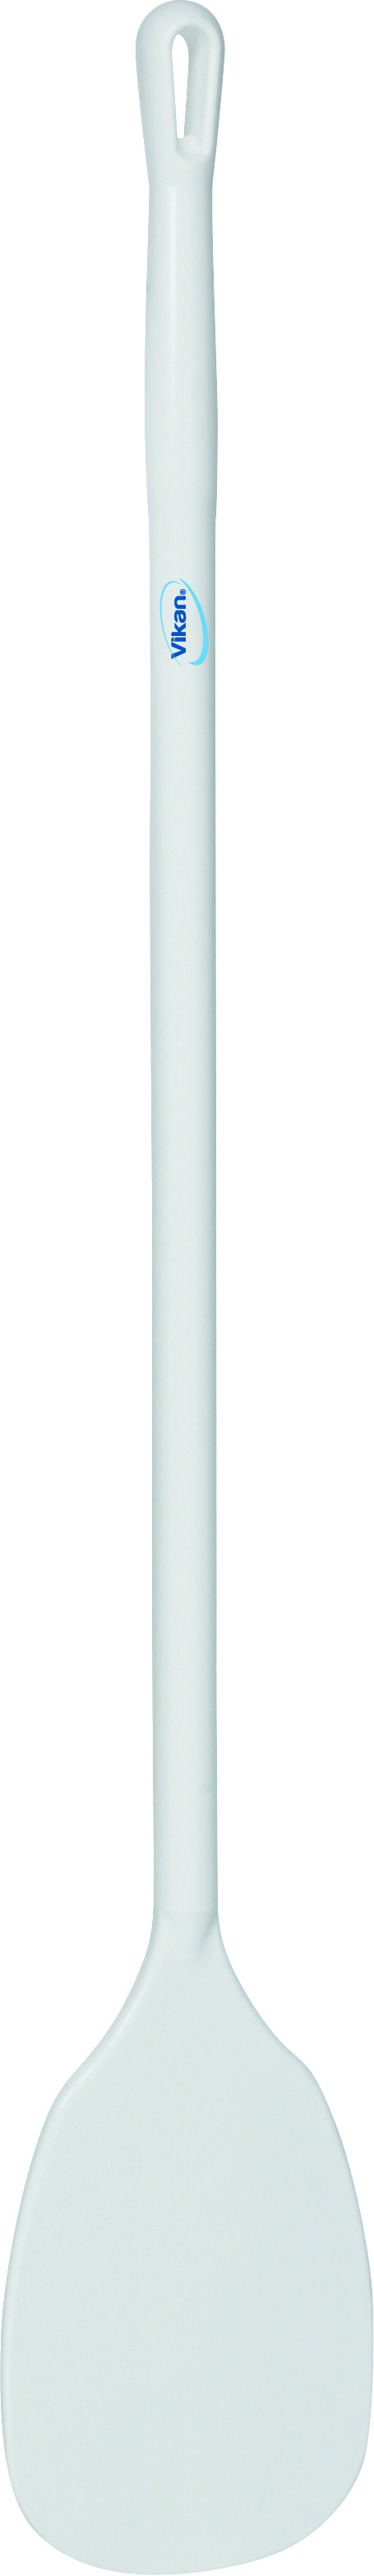 Весло-мешалка большая, Ø31 мм, 1190 мм, белый цвет